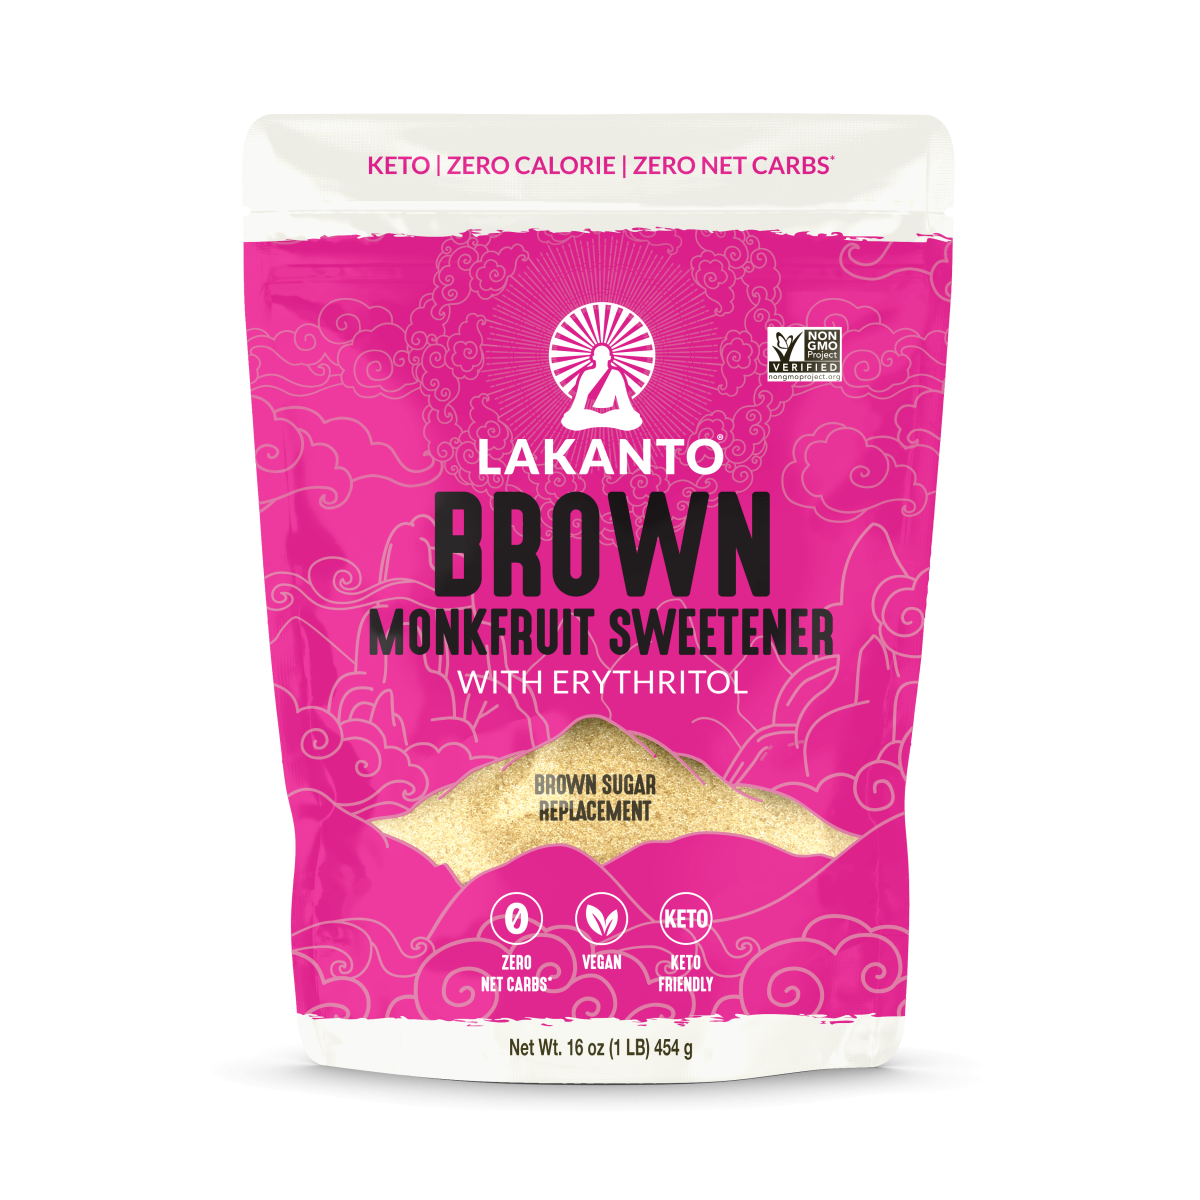 Lakanto MonkFruit Sweetener: Save 15 % with promo code: POUND15